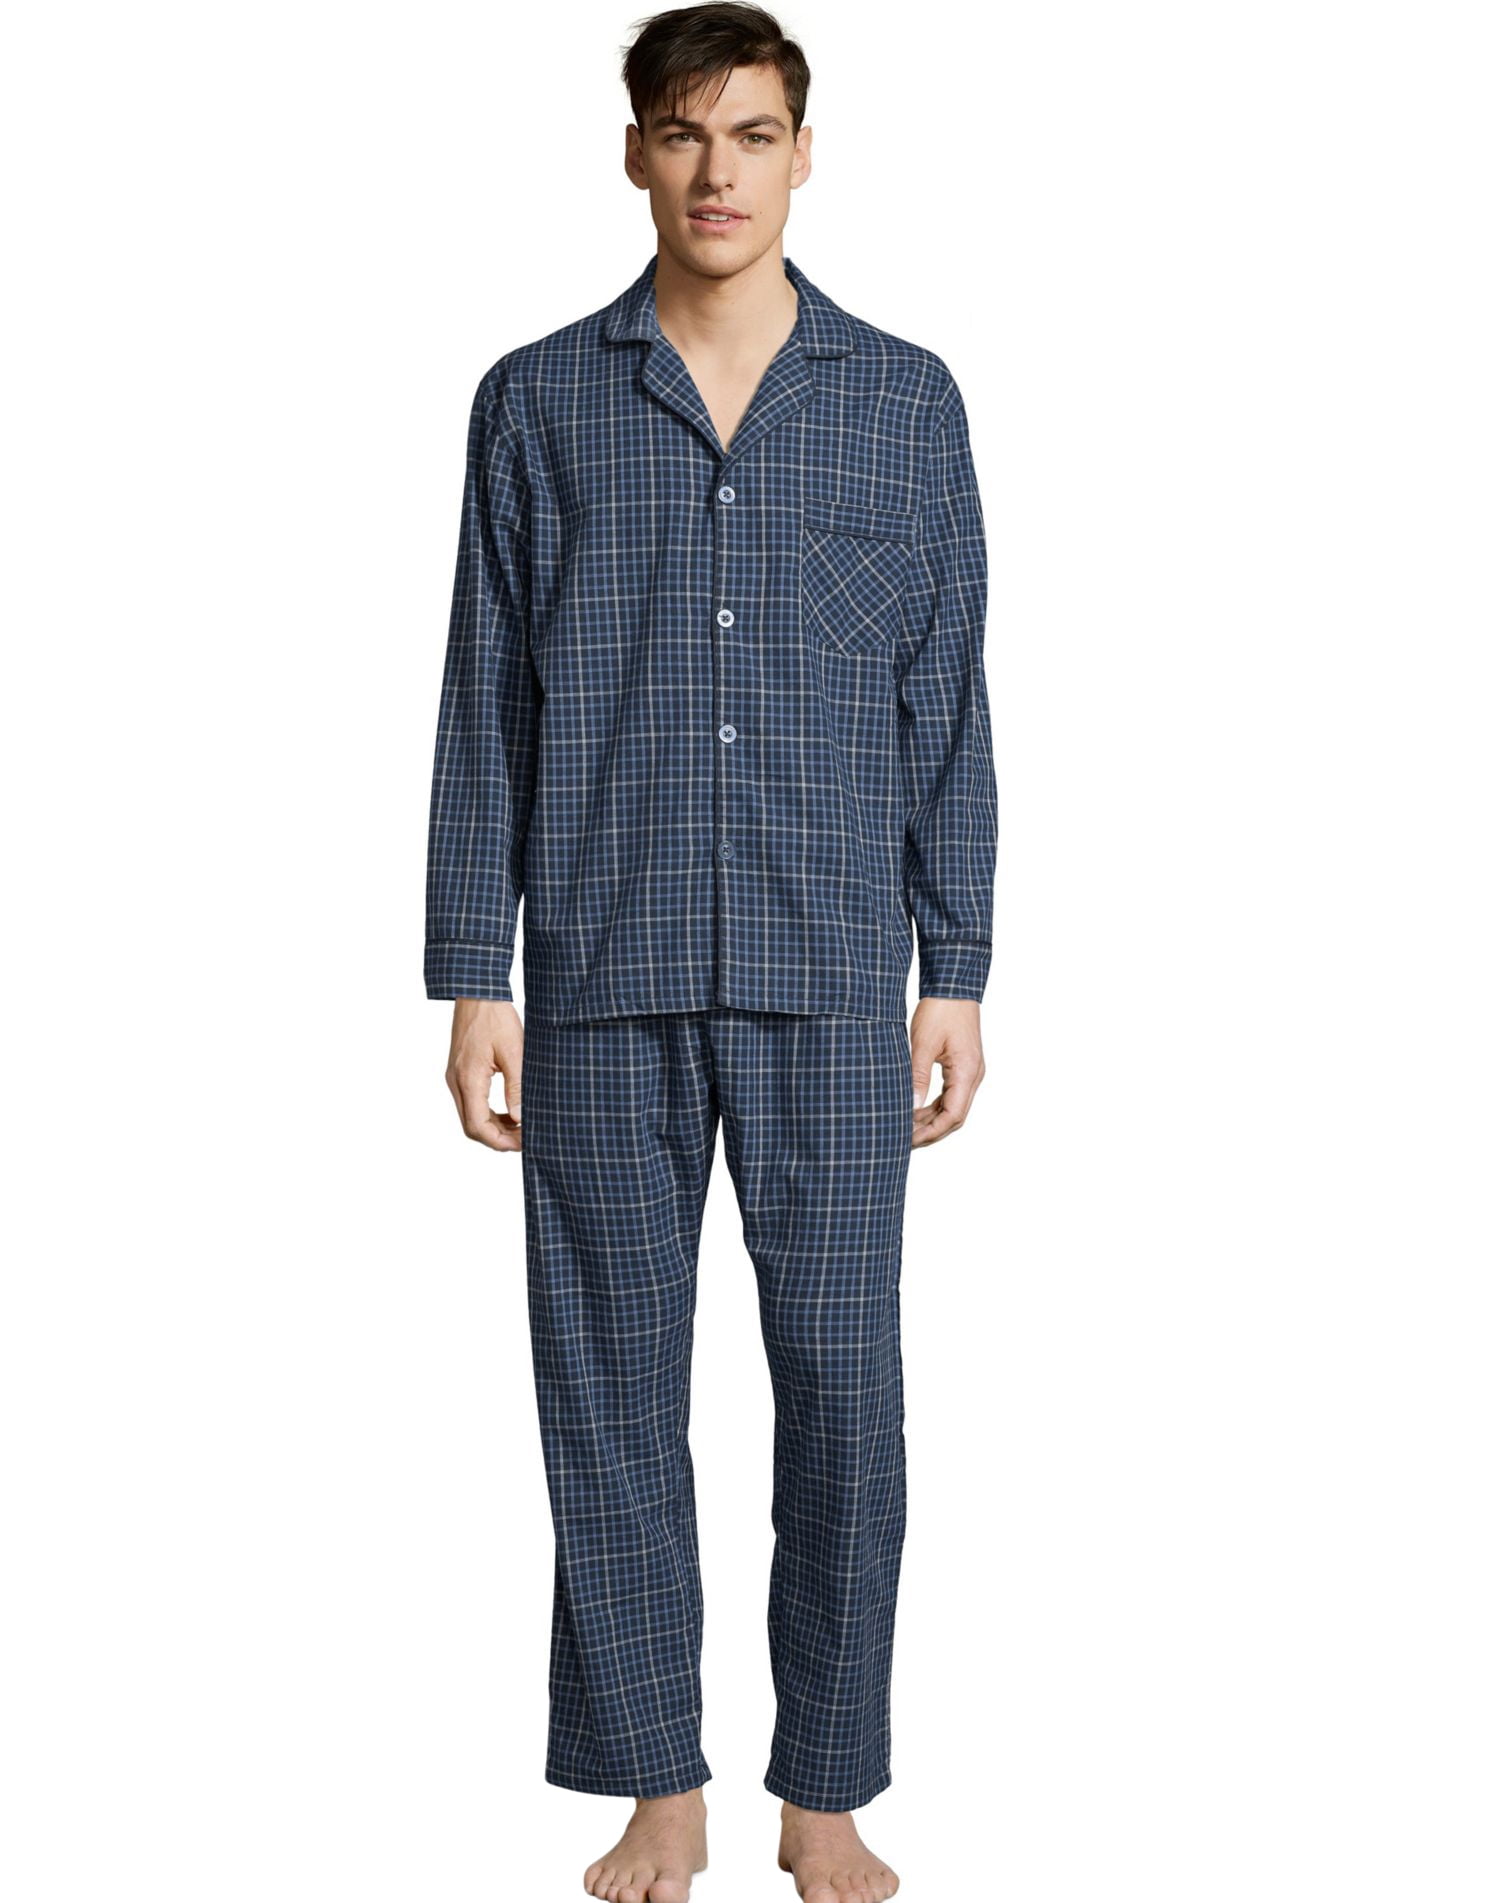 2X L XL Hanes MEN'S Woven Pajama Long Sleeve Shirt & Pants Grey Checked Plaid